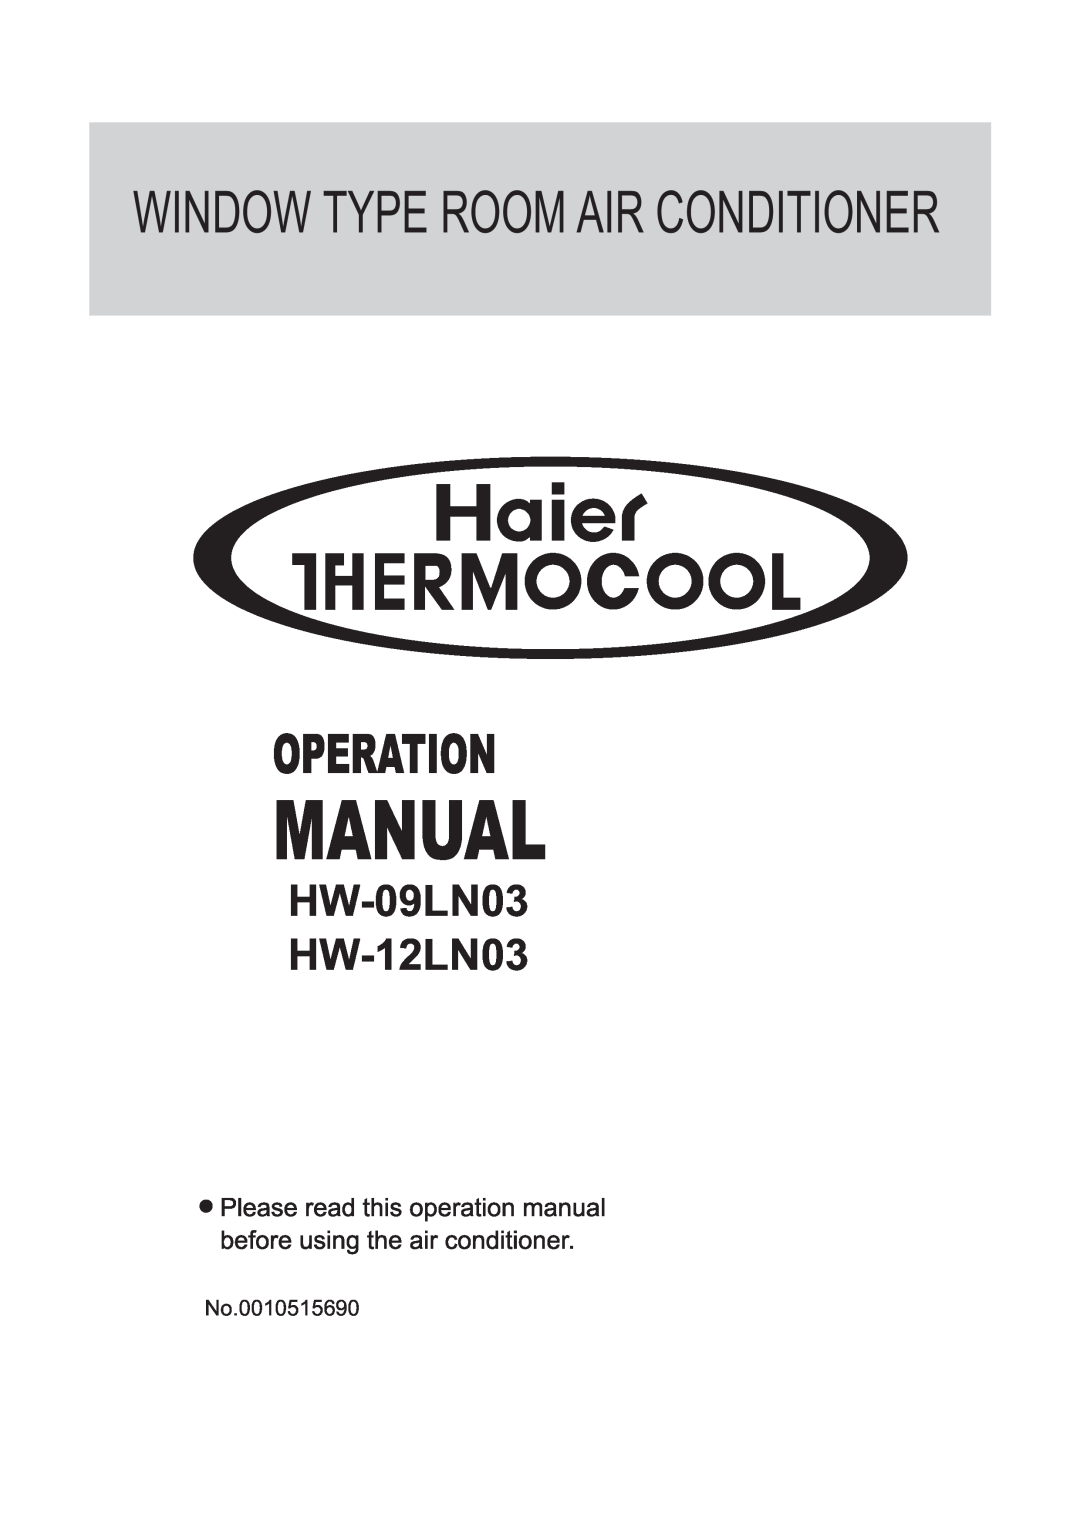 Haier manual No.0010515690, Window Type Room Air Conditioner, HW-09LN03 HW-12LN03 